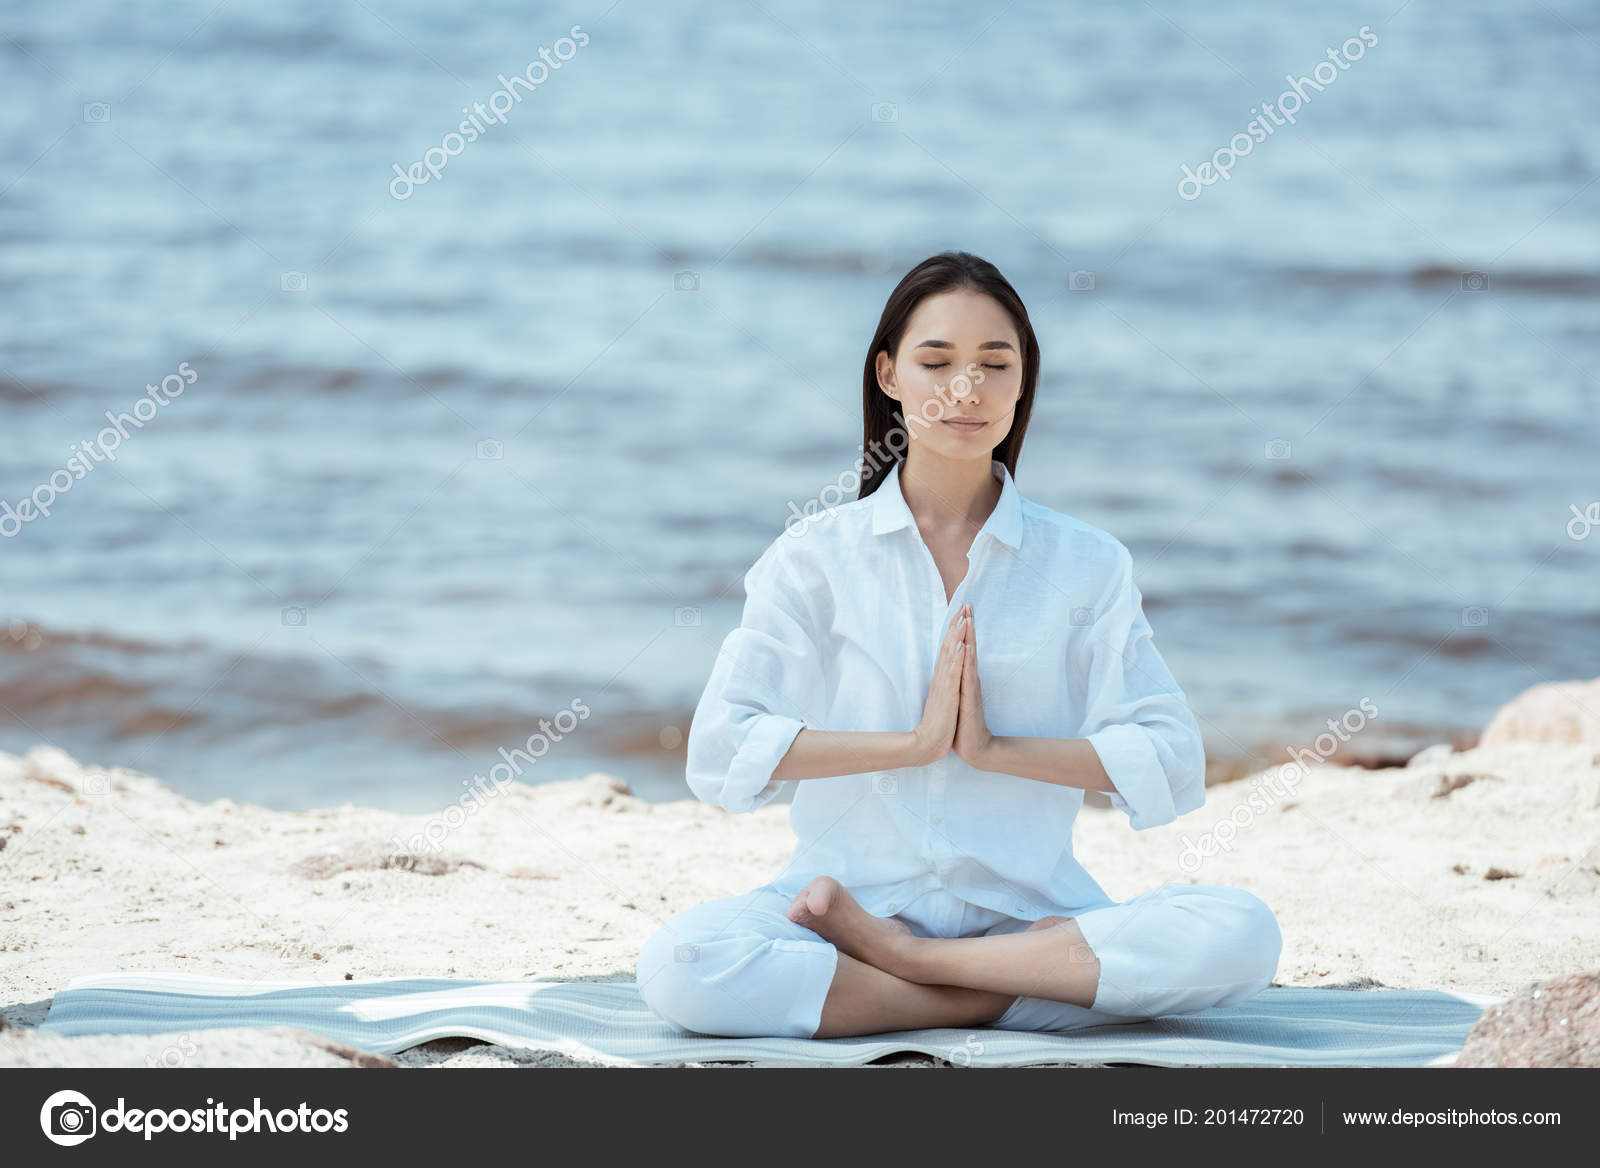 Anjali Mudra Benefits | Prayer Mudra Meaning and Significance - Fitsri Yoga